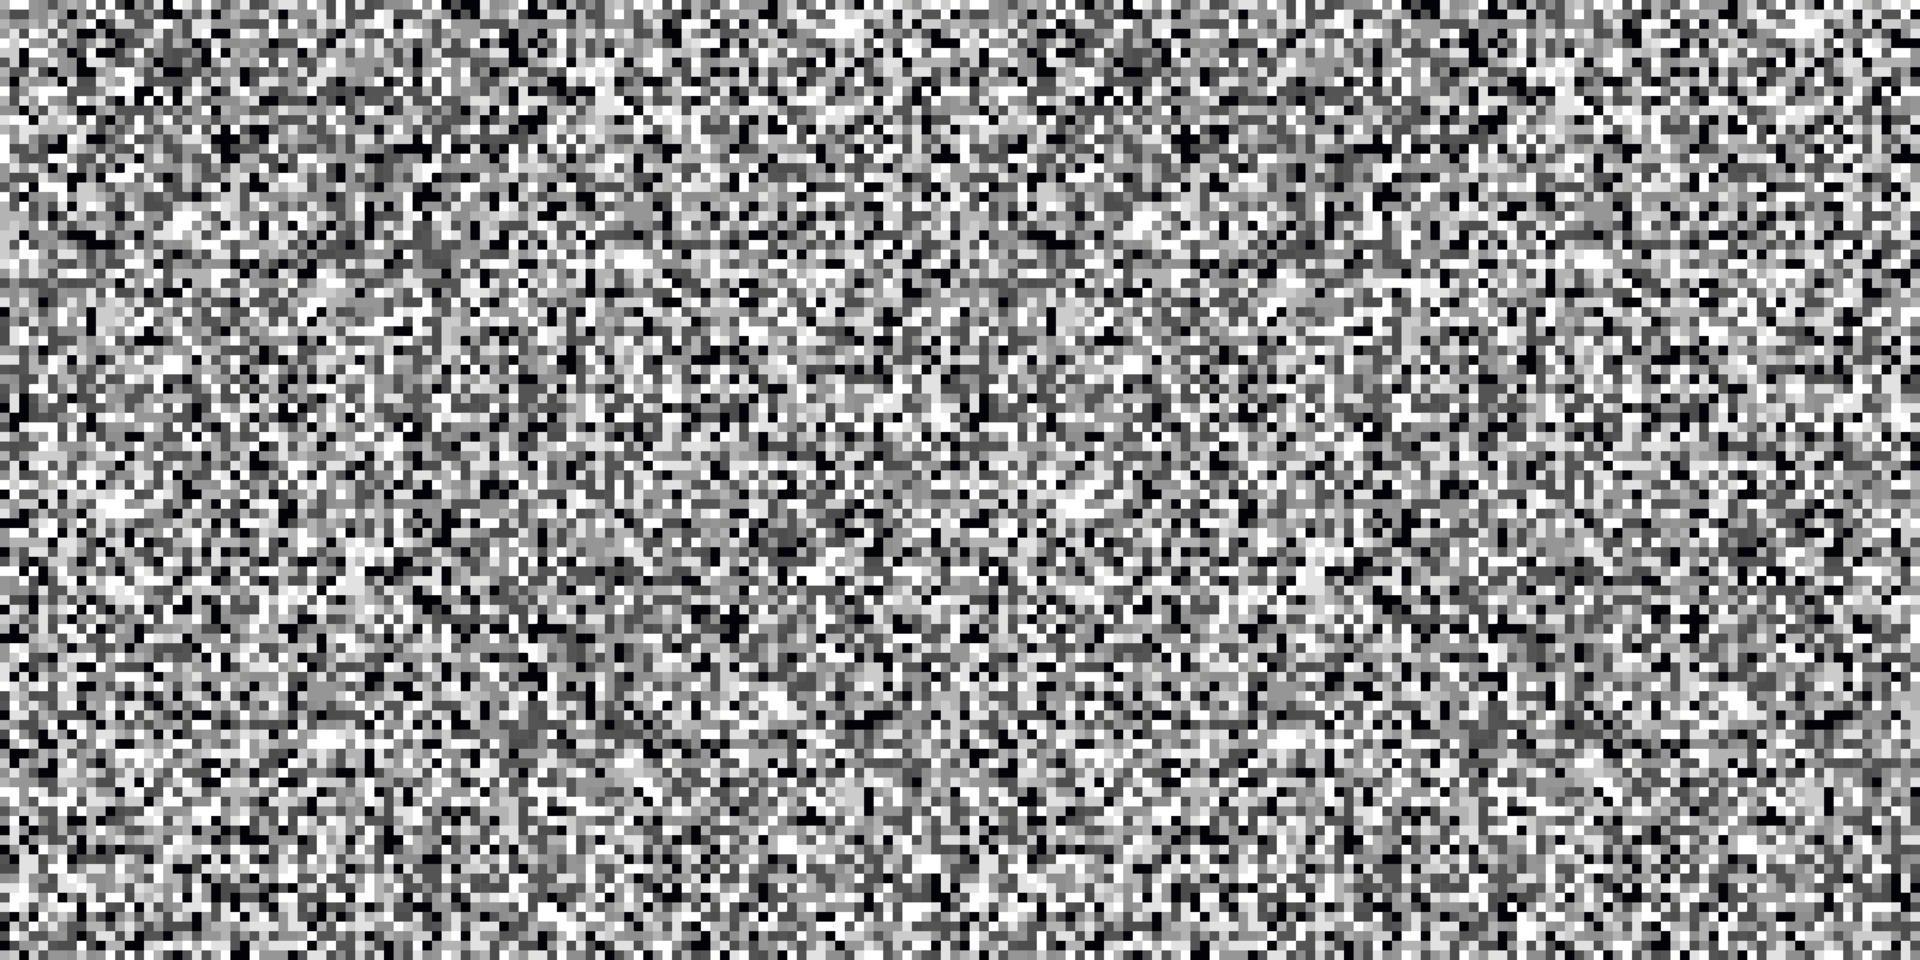 TV screen noise pixel glitch texture background vector illustration.